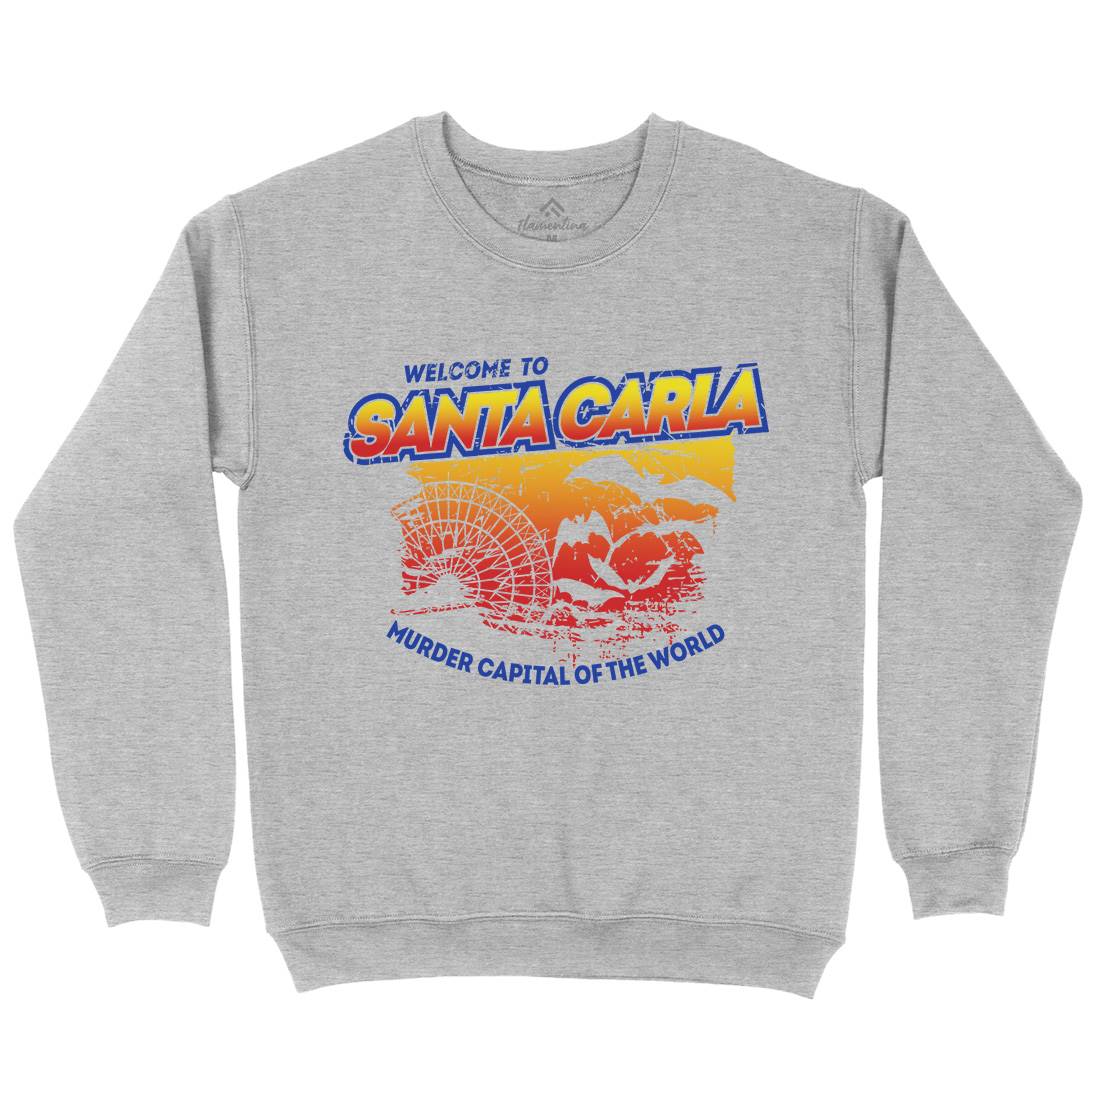 Santa Carla Kids Crew Neck Sweatshirt Horror D369